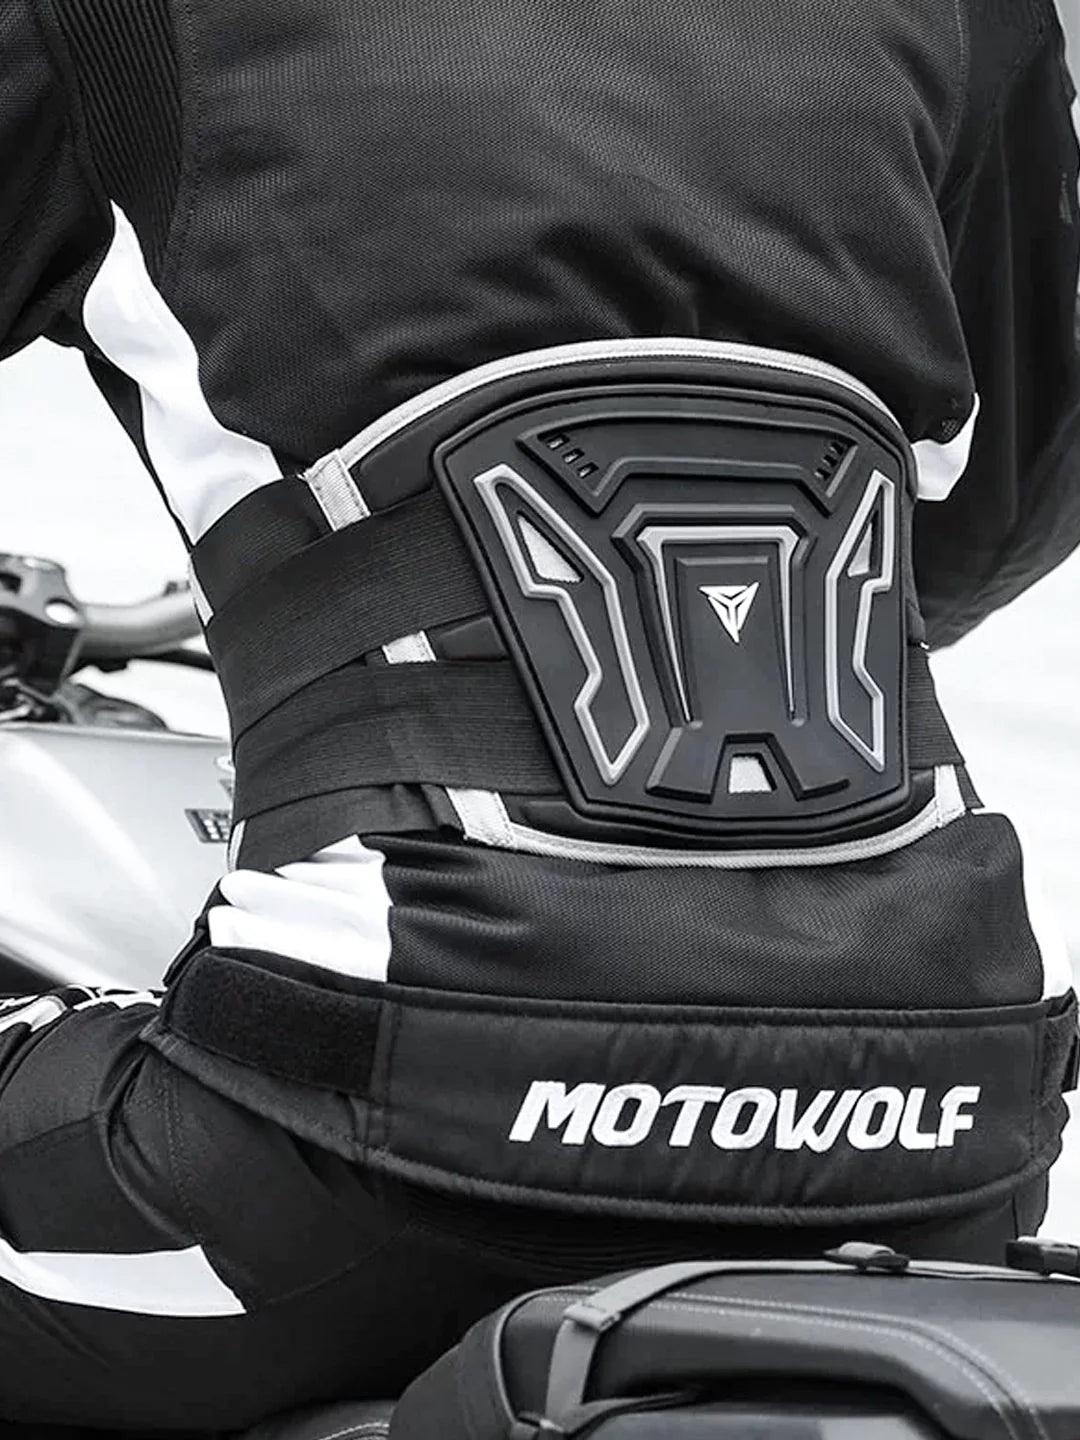 Motowolf Kidneybelt Black 1028 - Moto Modz